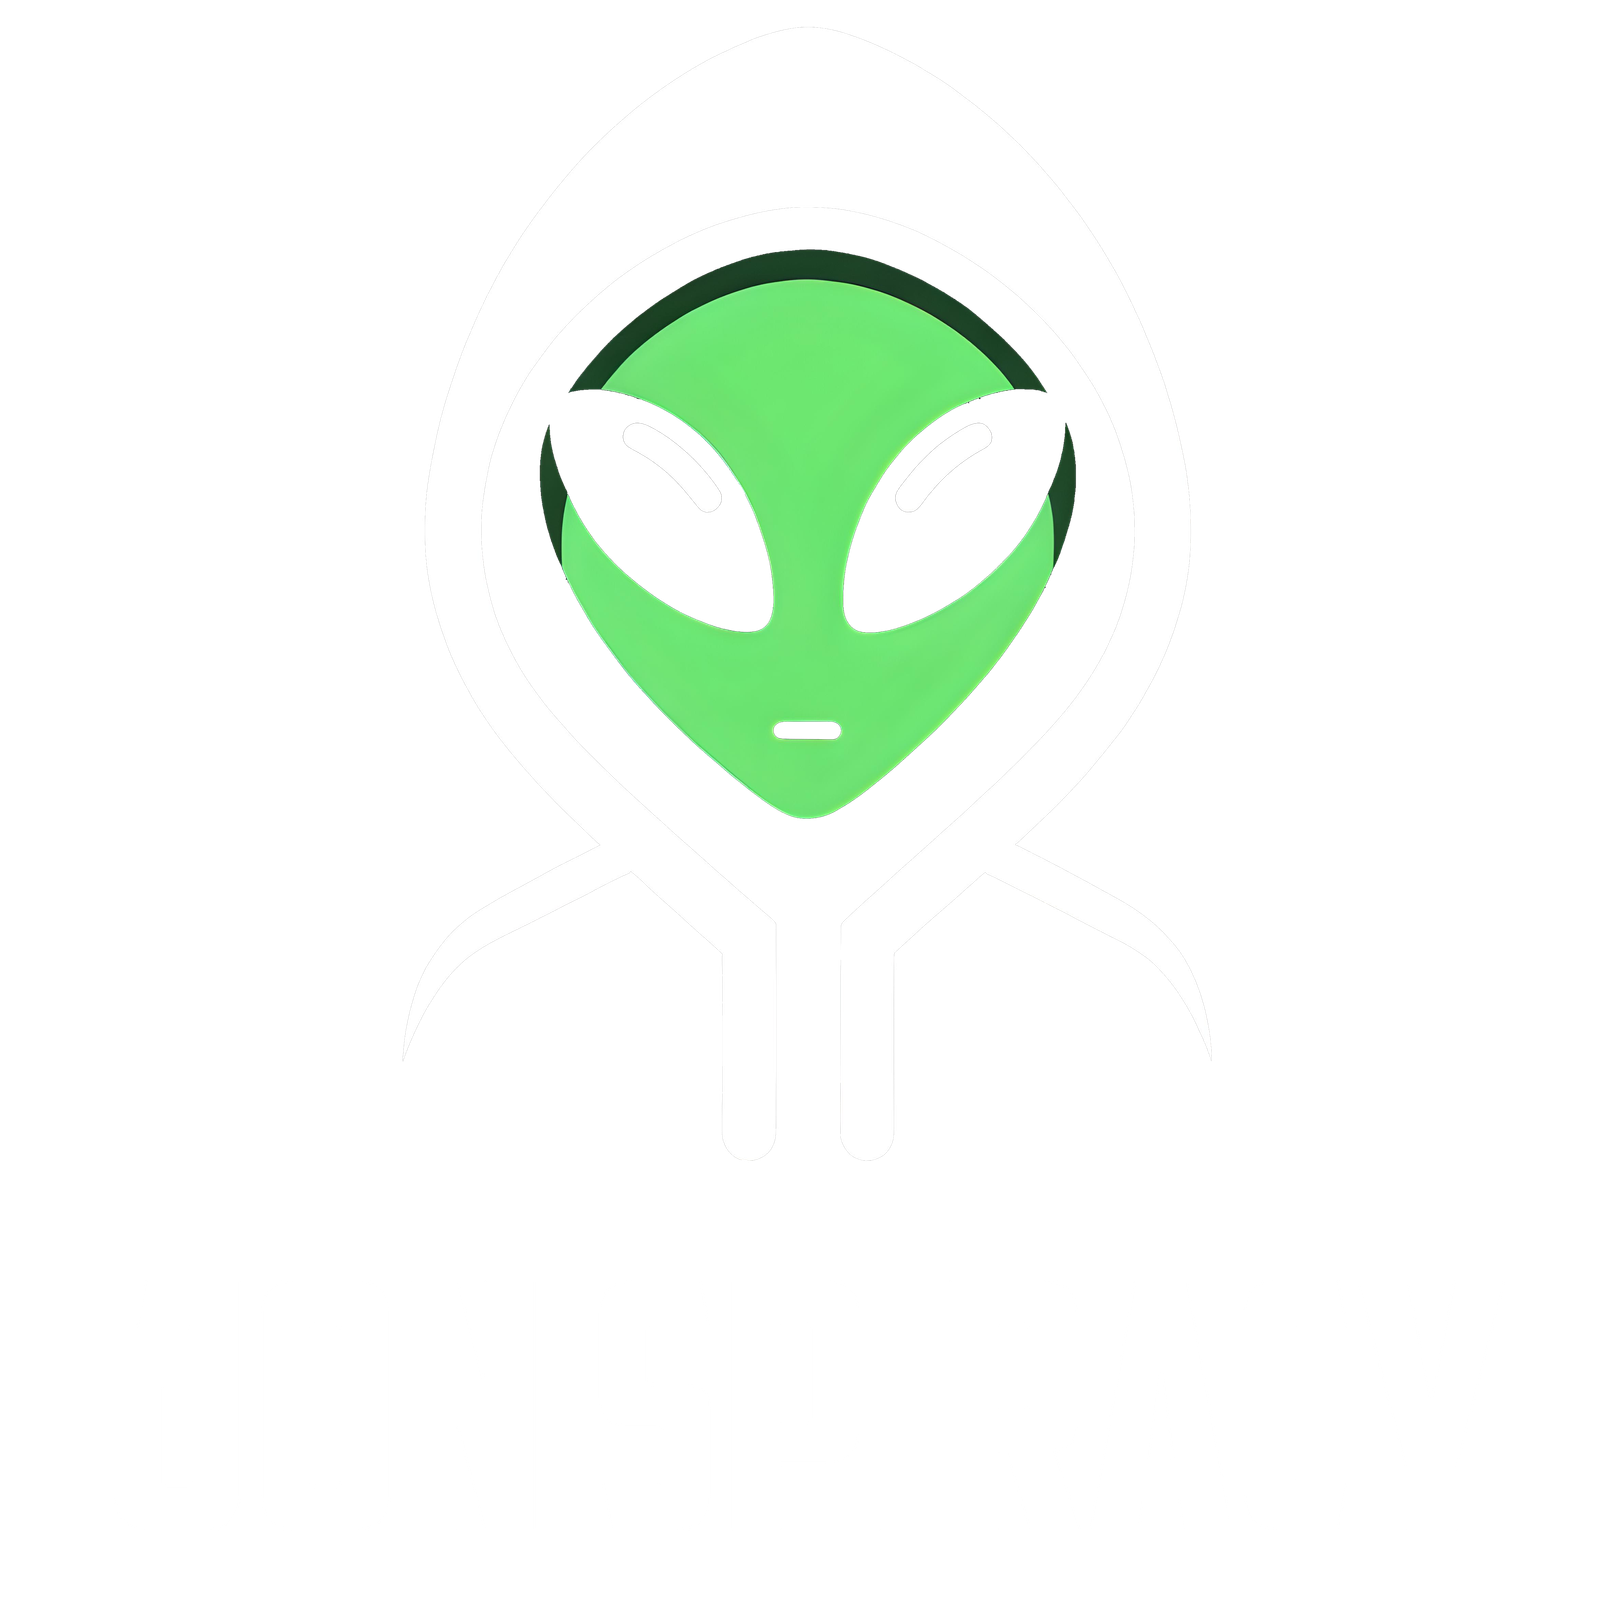 Jon Spiracy